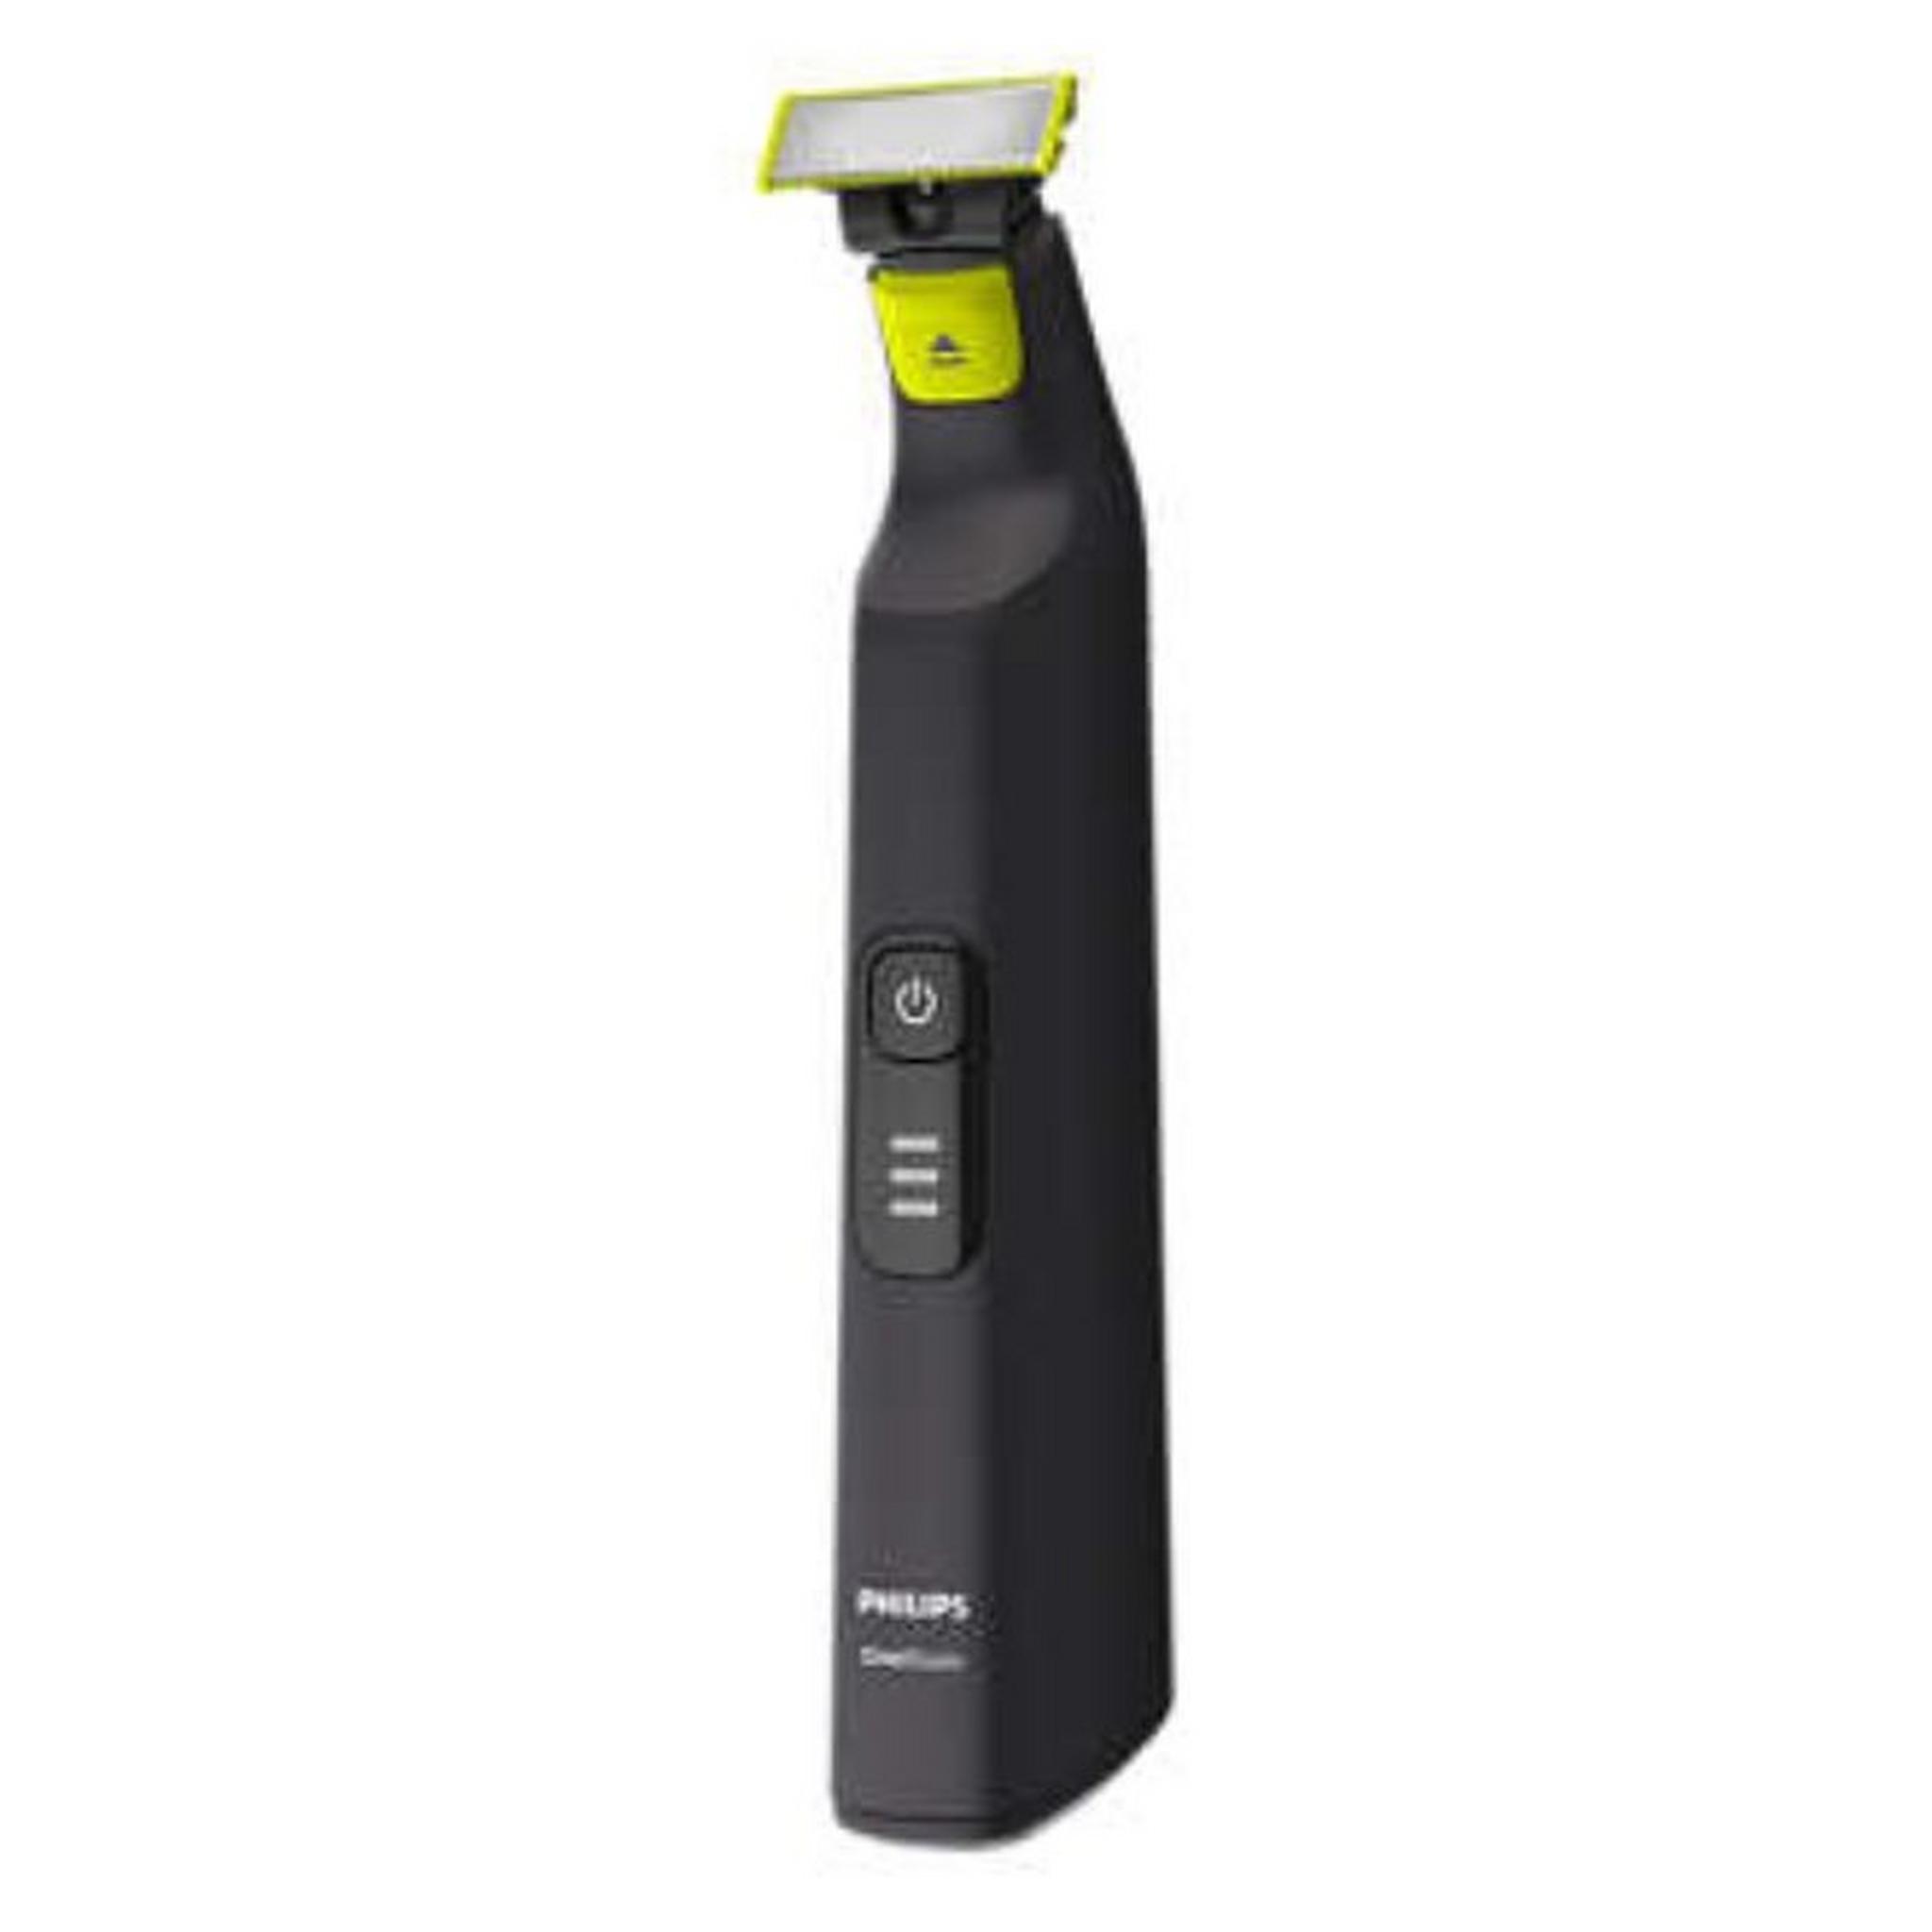 Philips OneBlade Pro Hybrid Styler for Trim, Shave, Edge, QP6530/23 - Black